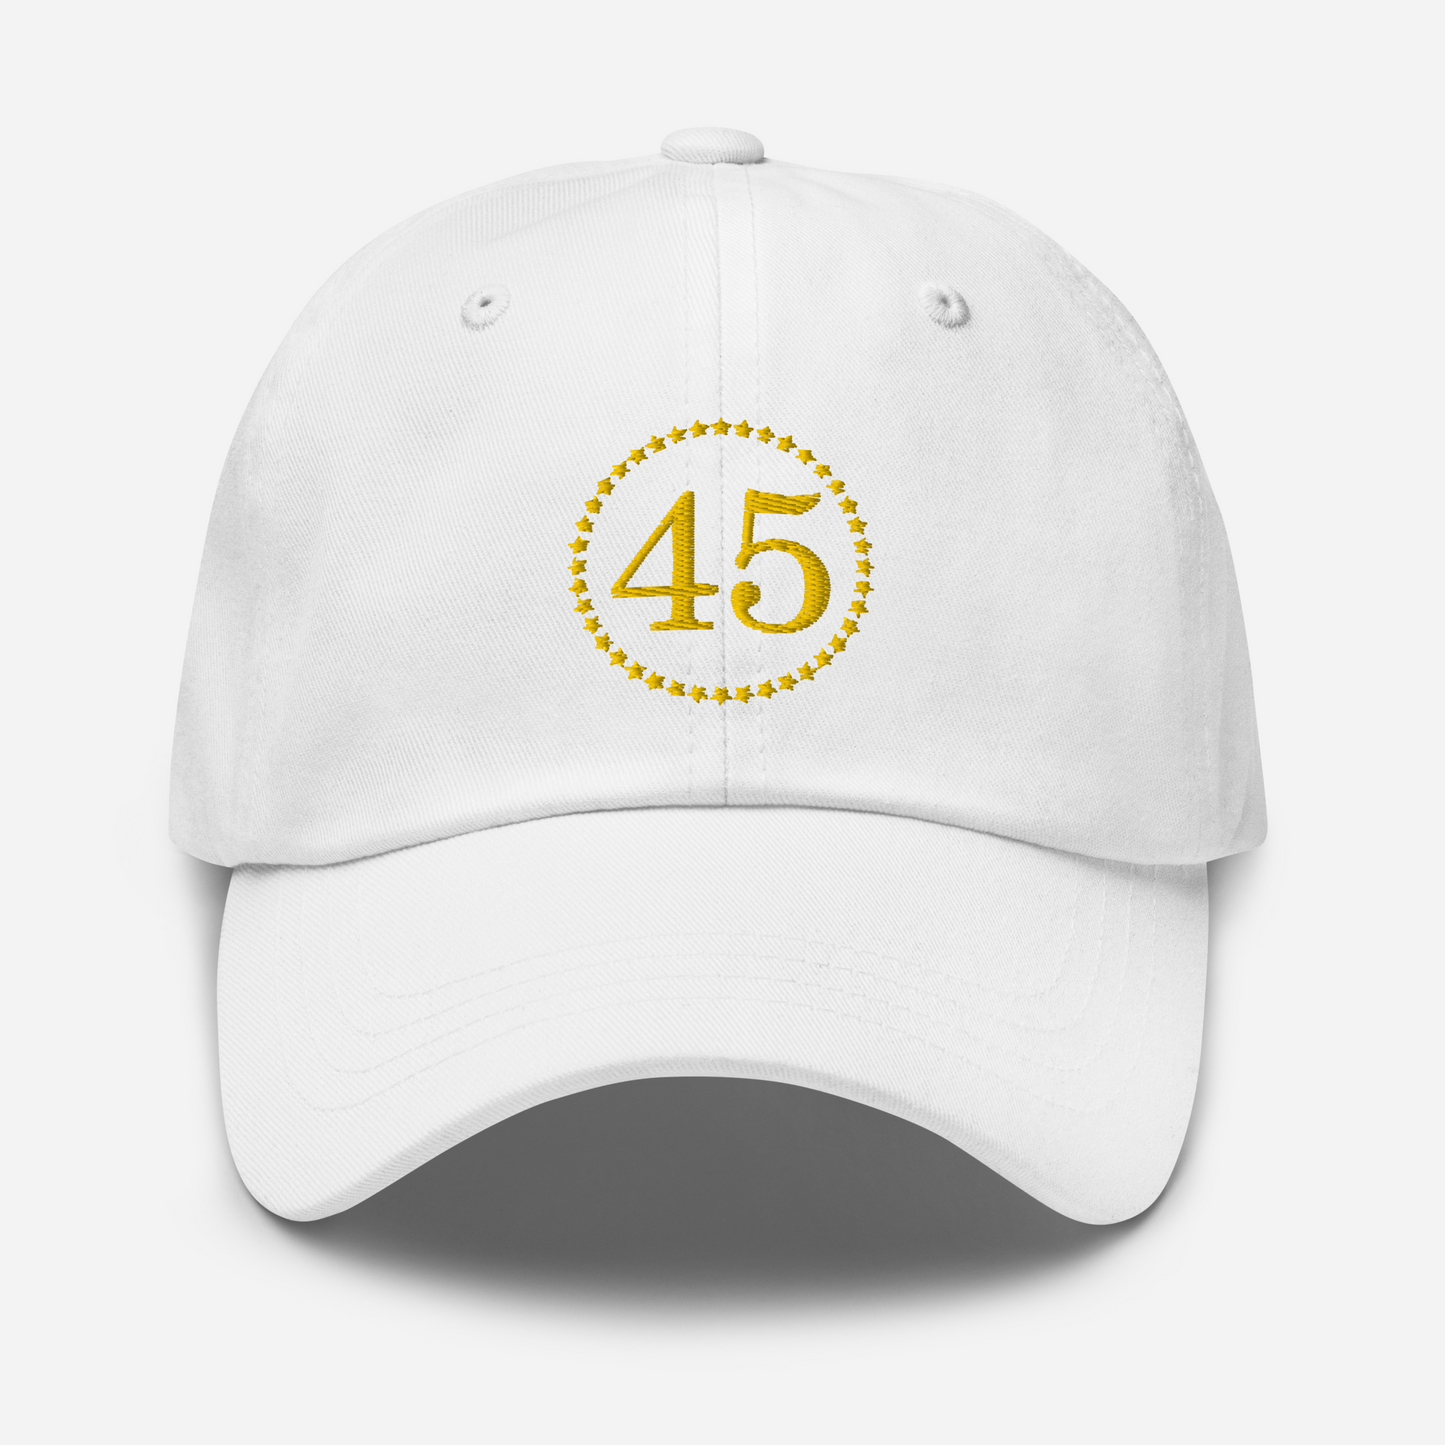 Trump 45 - Gold Embroidery Cap